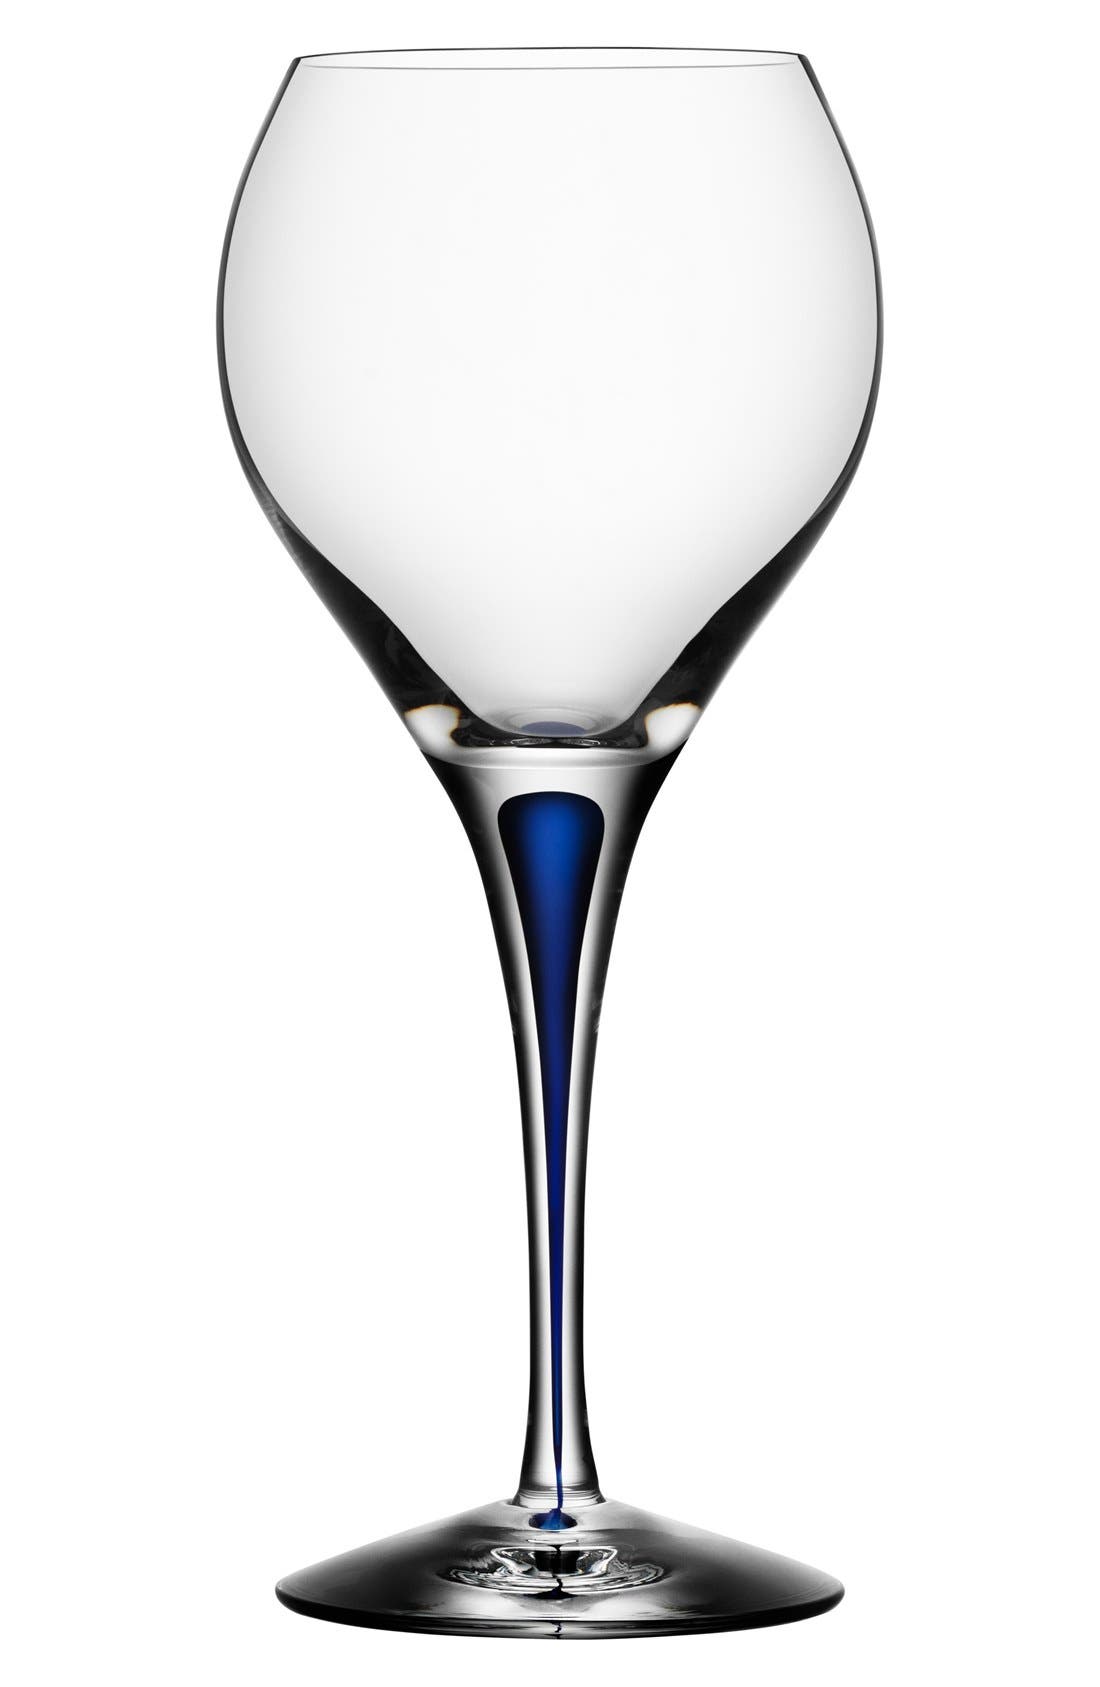 EAN 7319672574171 product image for Orrefors 'Intermezzo' Sweet Wine Glass - Blue | upcitemdb.com